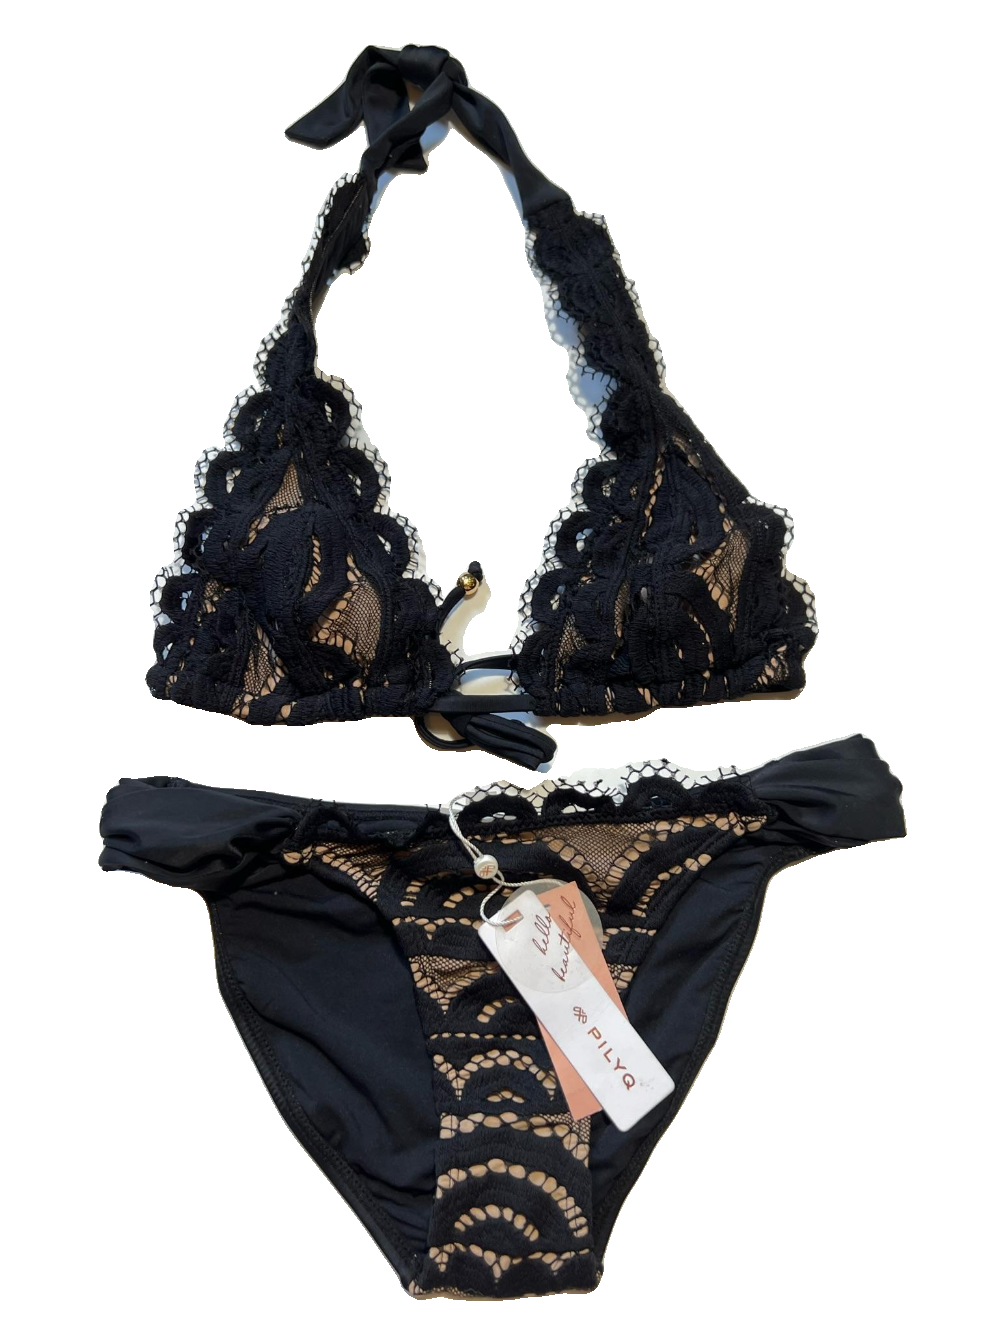 PILYQ - Black Lace Halter Bikini Set - NEW WITH TAGS